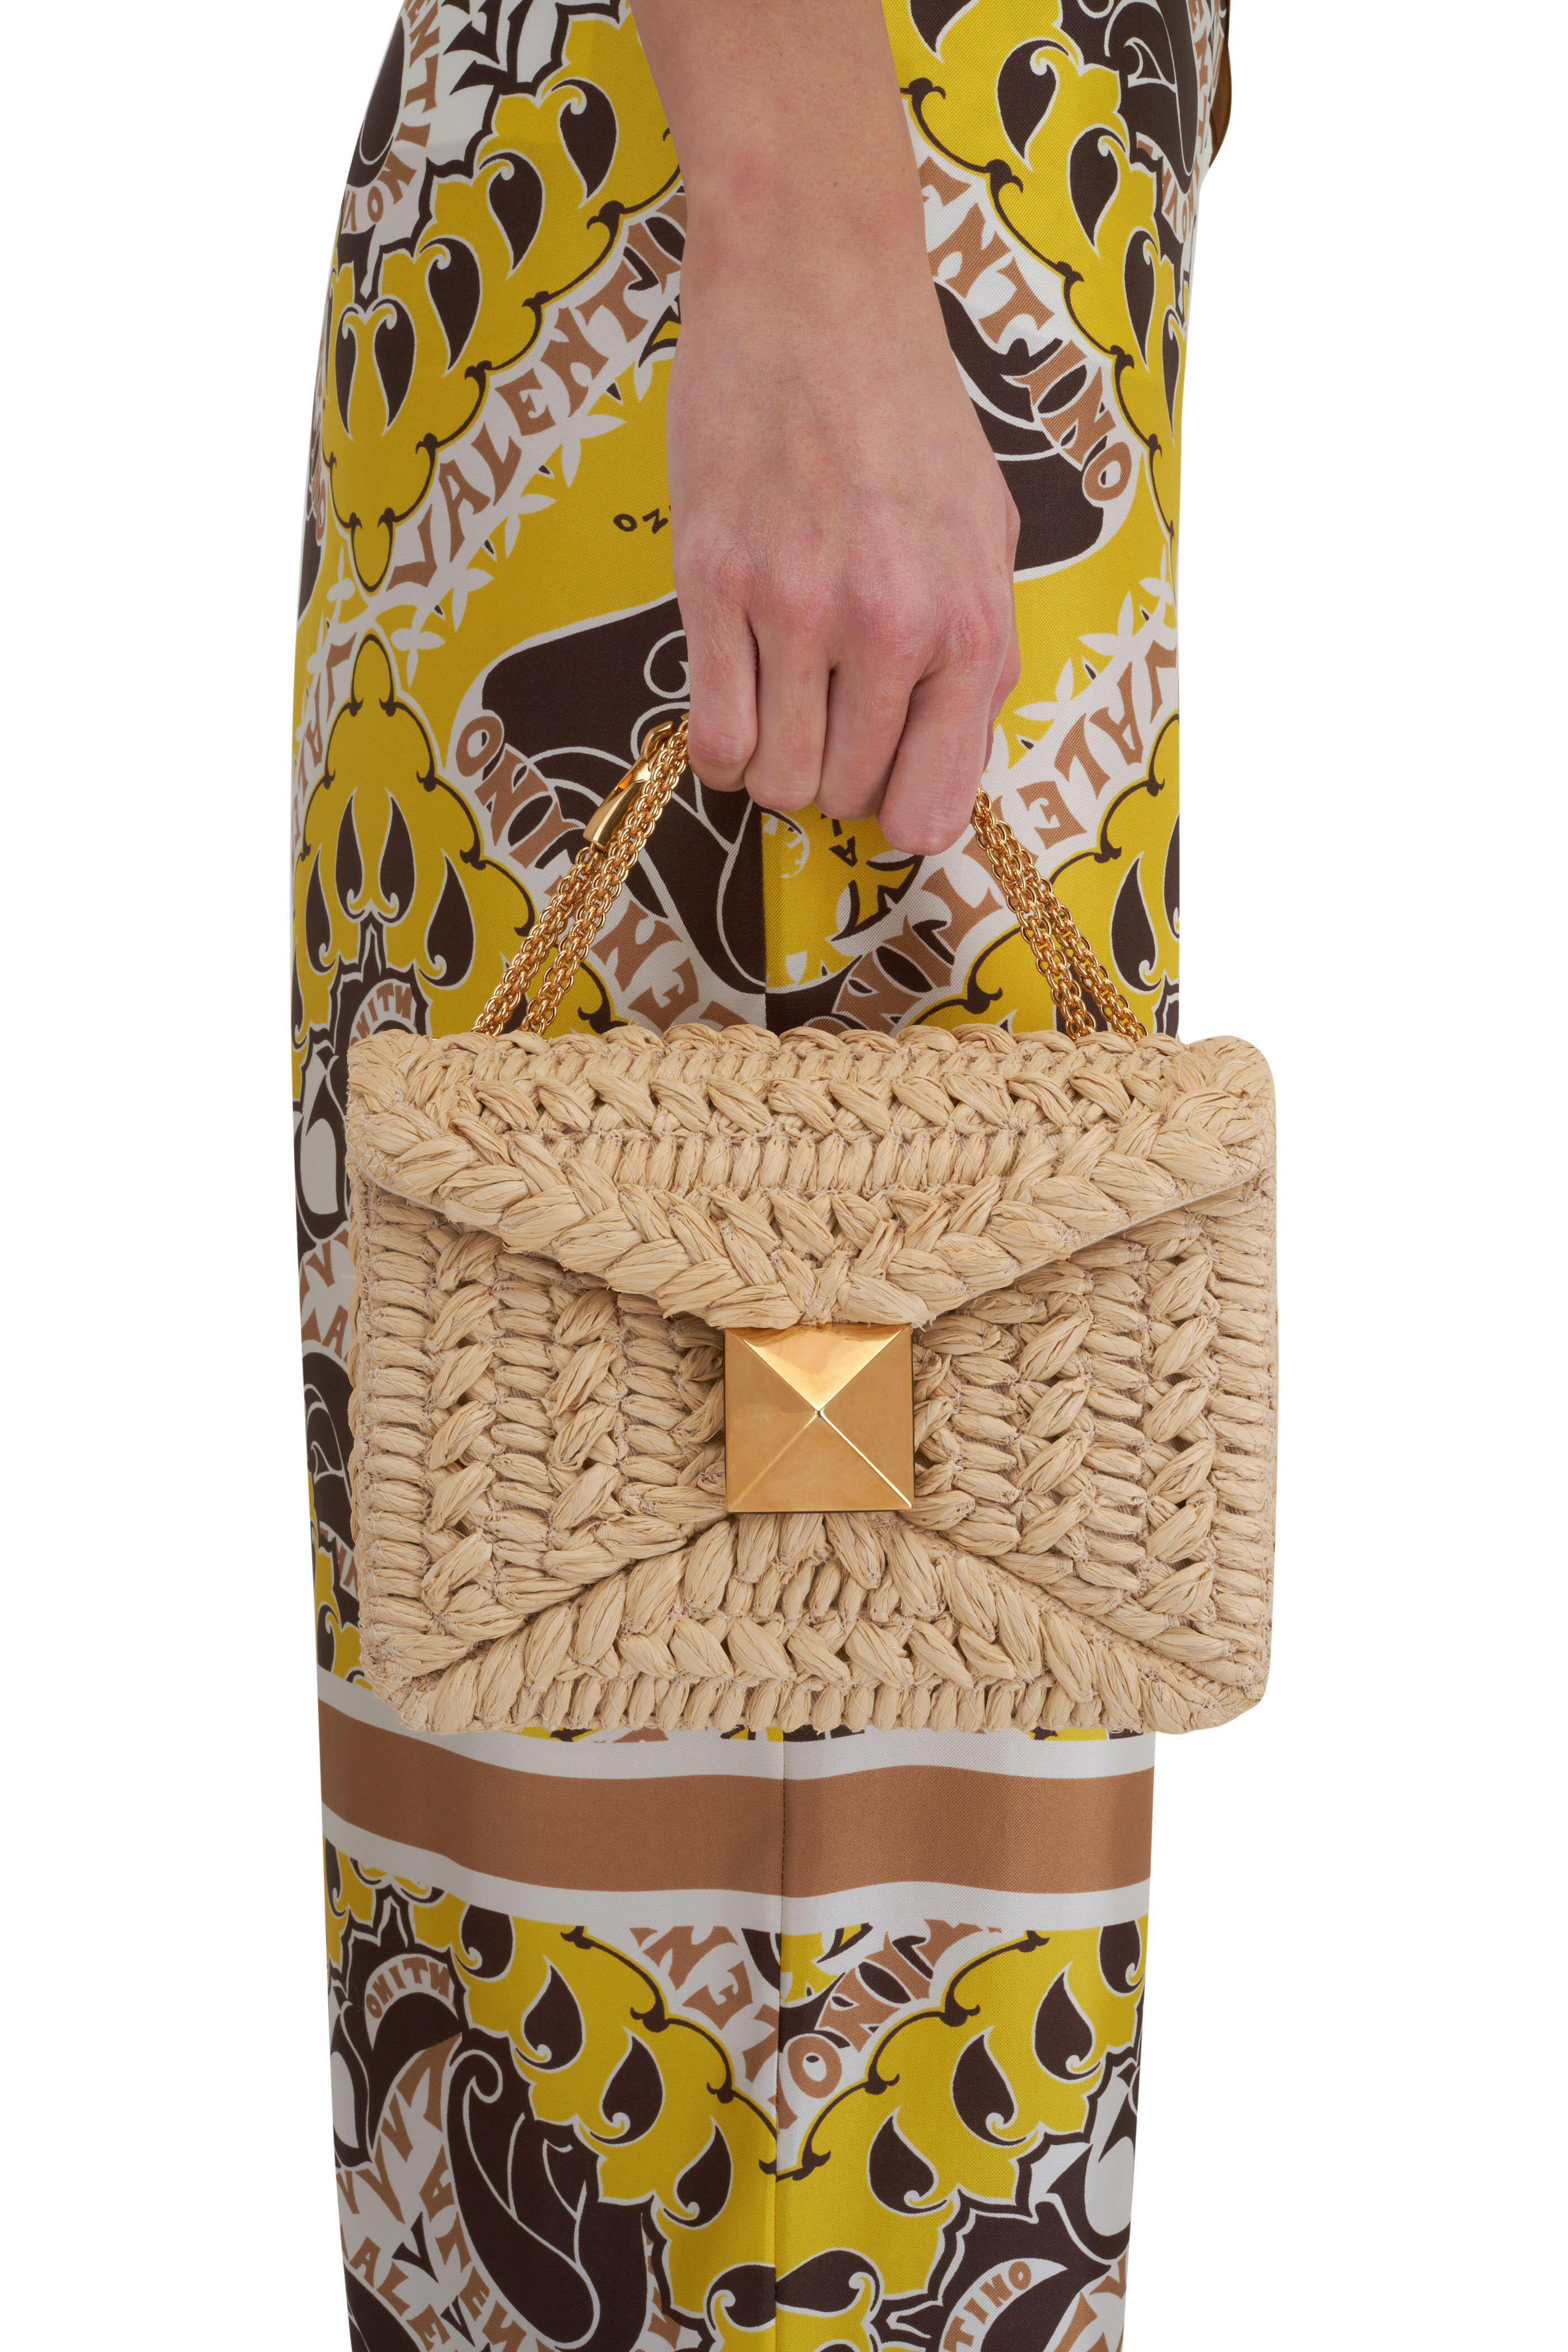 Valentino Garavani Women's Poudre Rockstud Small Tote Crossbody Bag | by Mitchell Stores